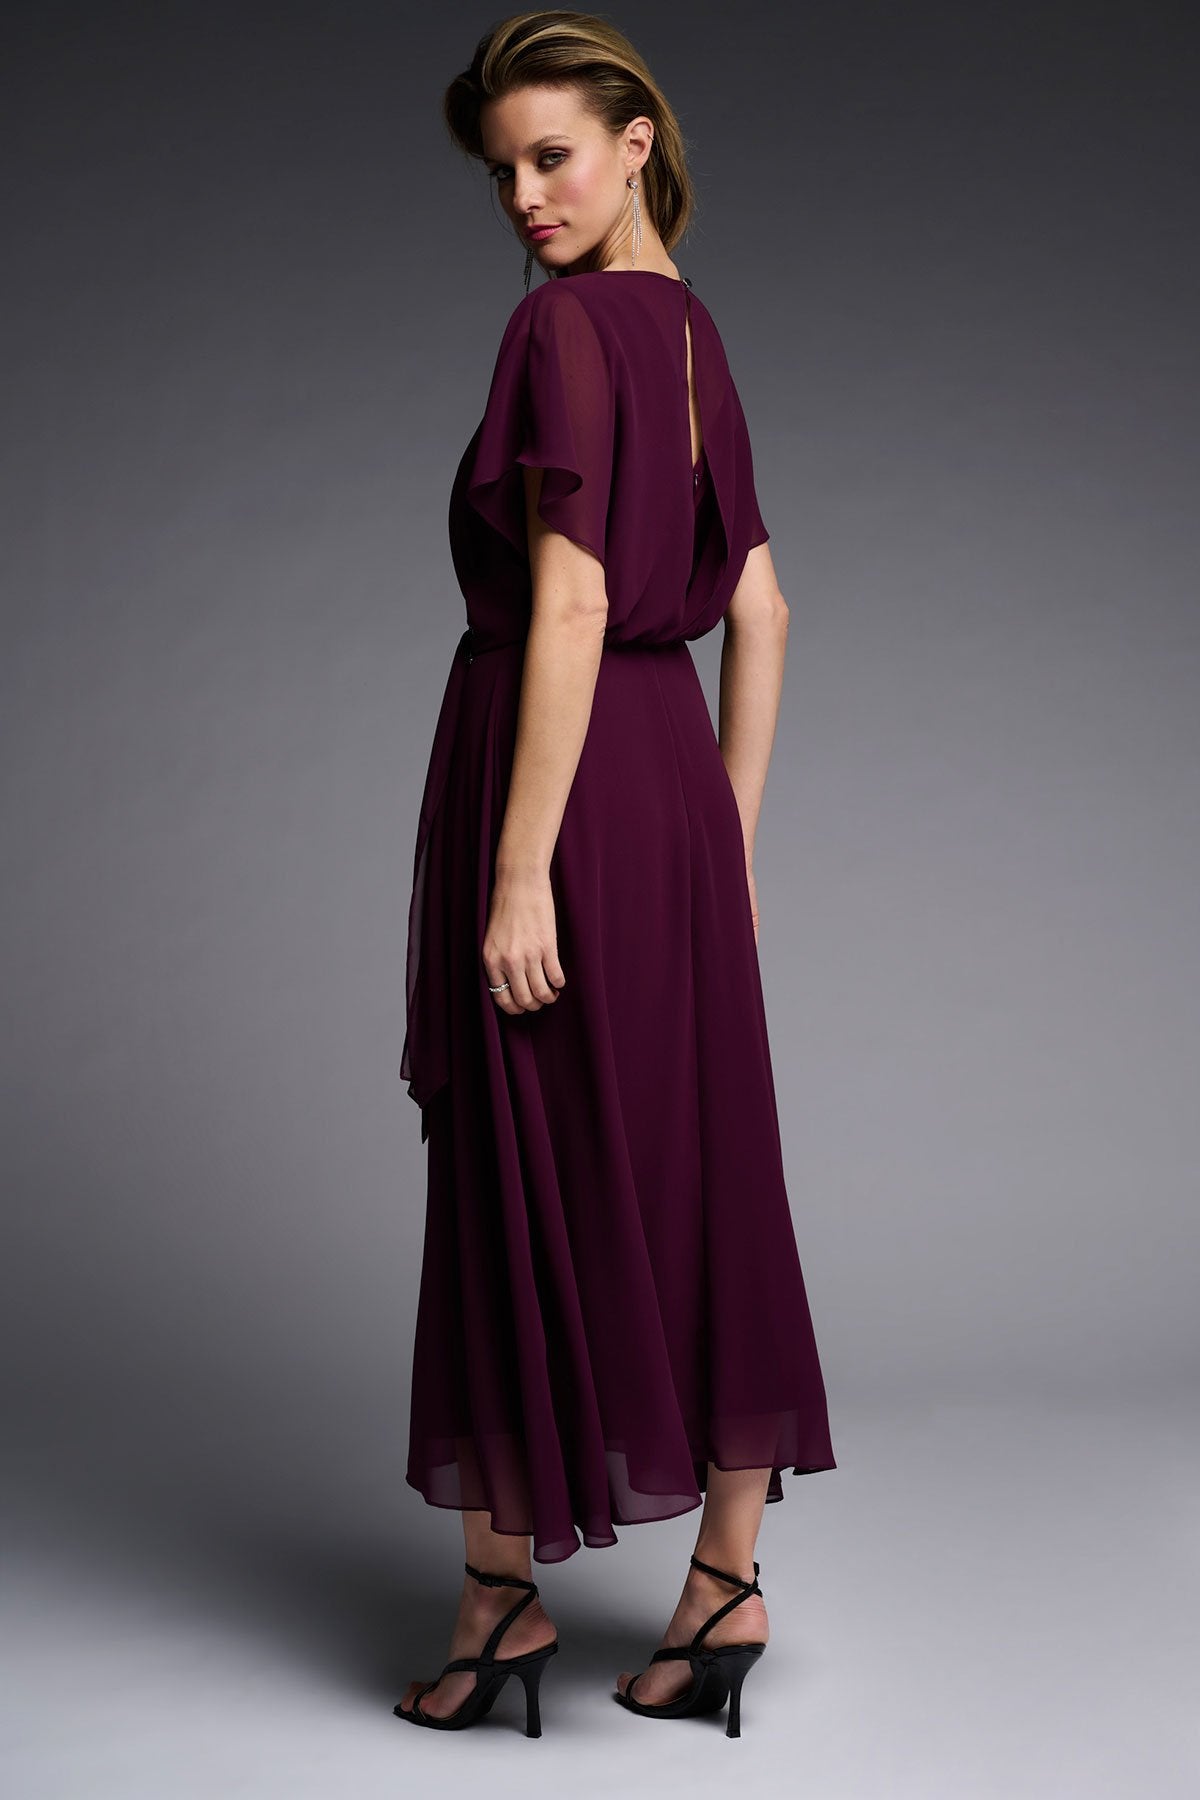 Joseph Ribkoff - A-Line Maxi Dress - Style 223734 - Mulberry or Rainforest